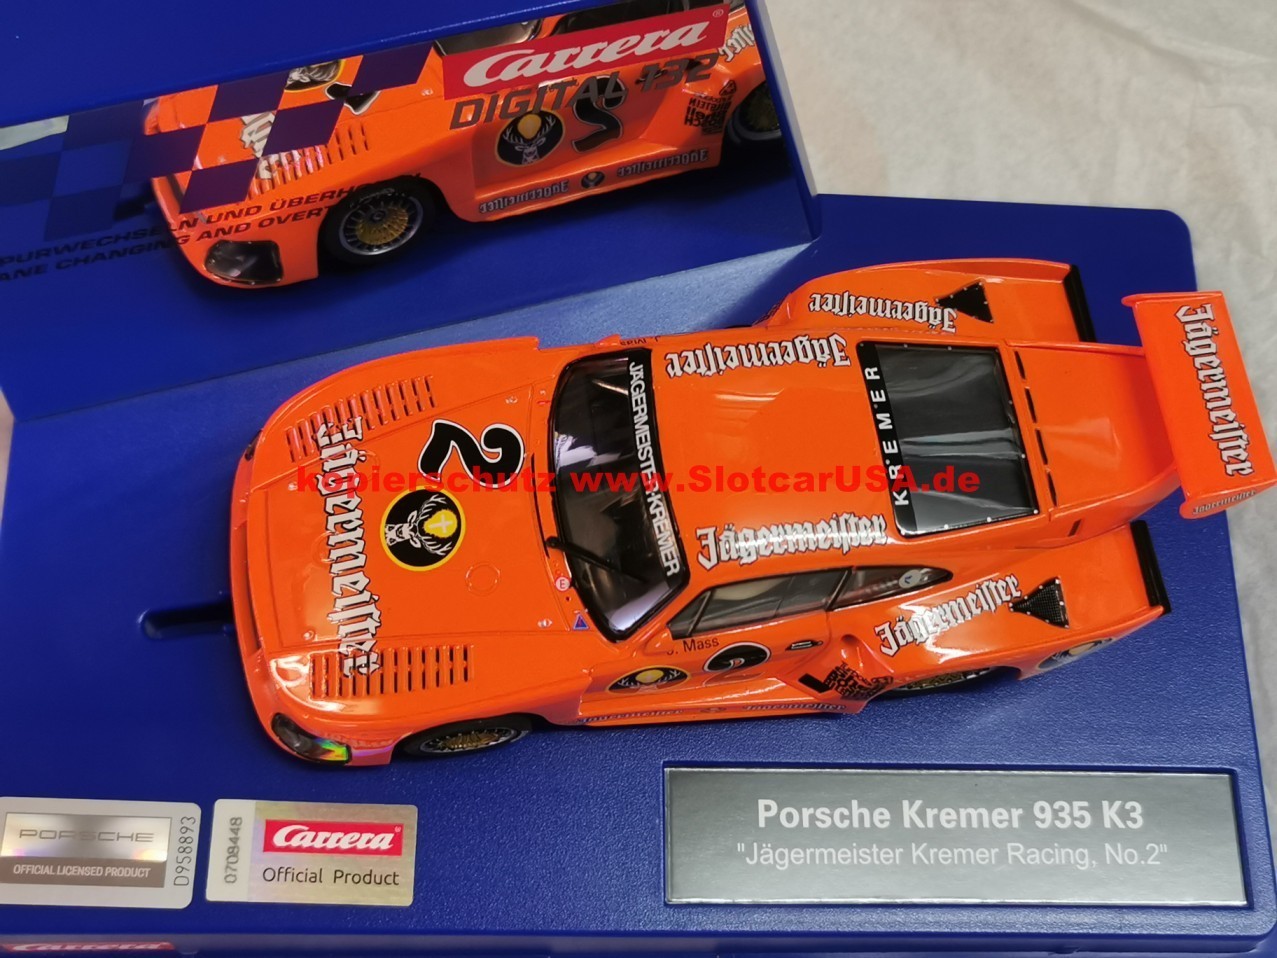 Carrera 30898 Porsche Kremer 935 K3 Vaillant #51  Digital 132 Slot Car Racing Vehicle 1:32 Scale 